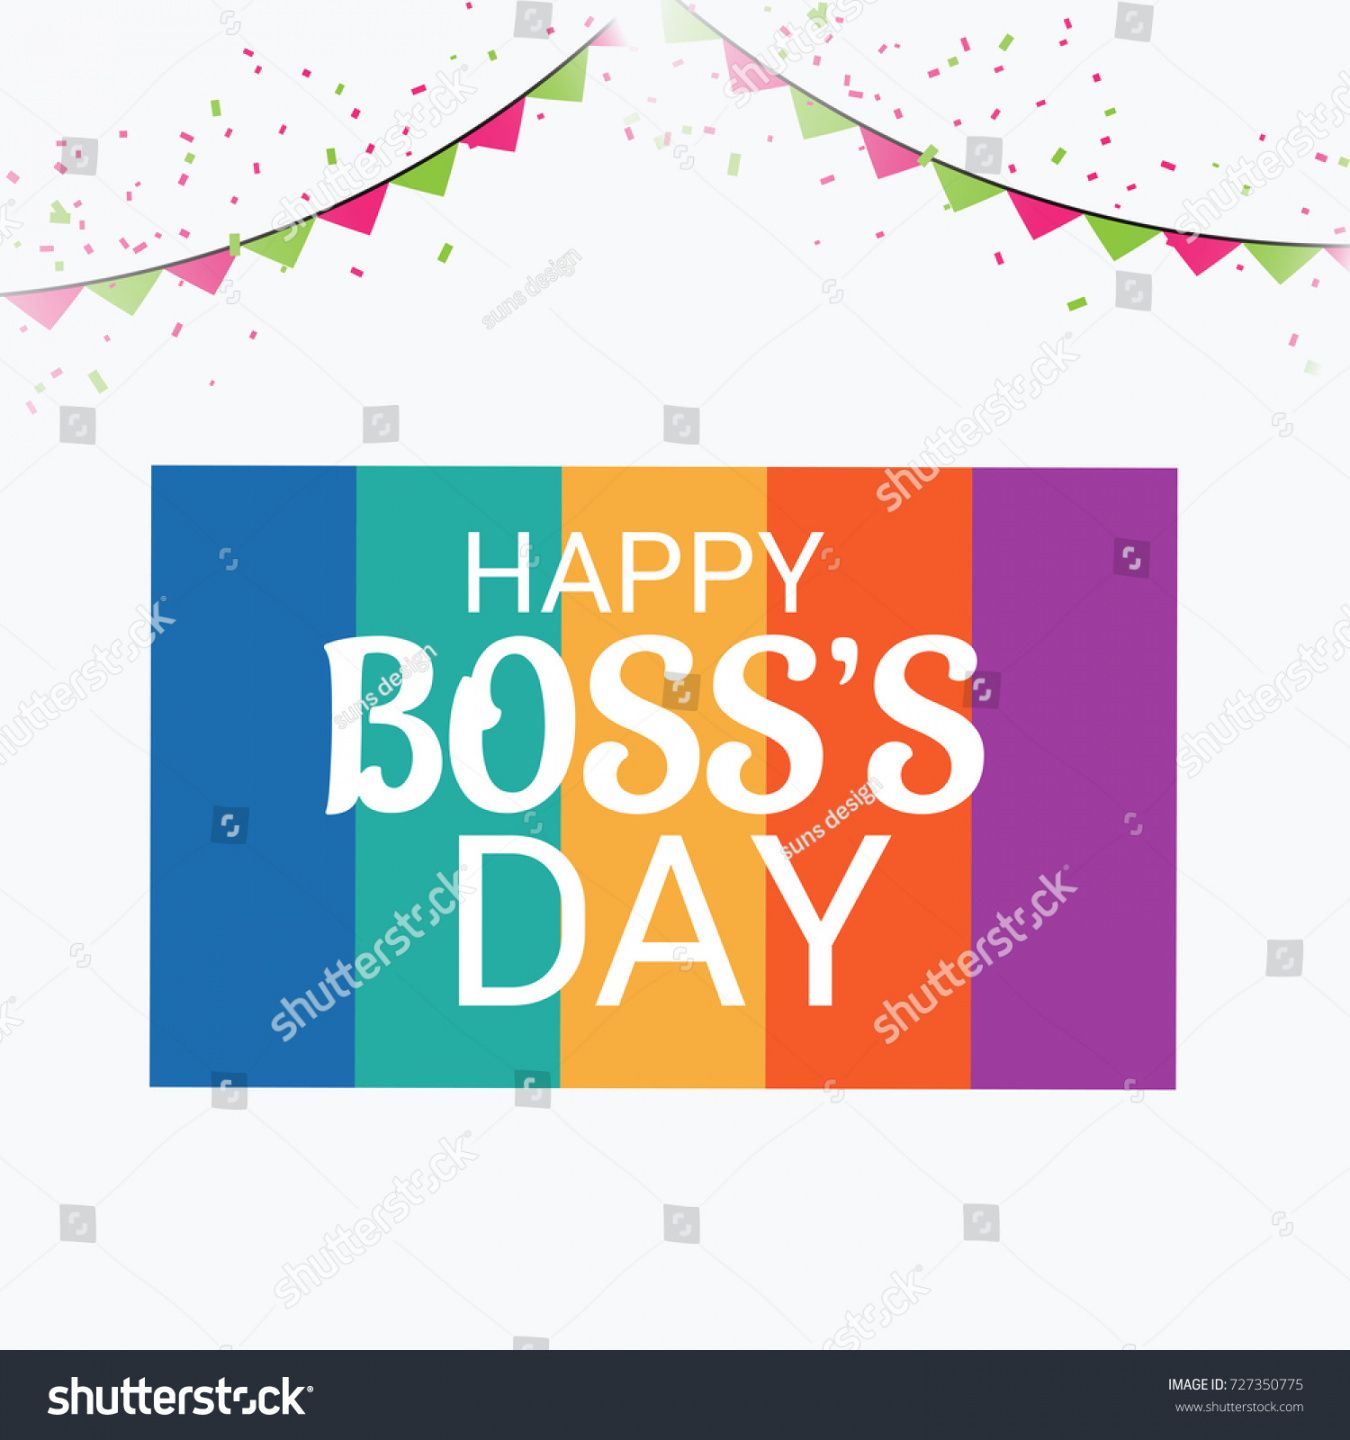 editable vector illustration banner happy bosss day stock vector boss day banner template